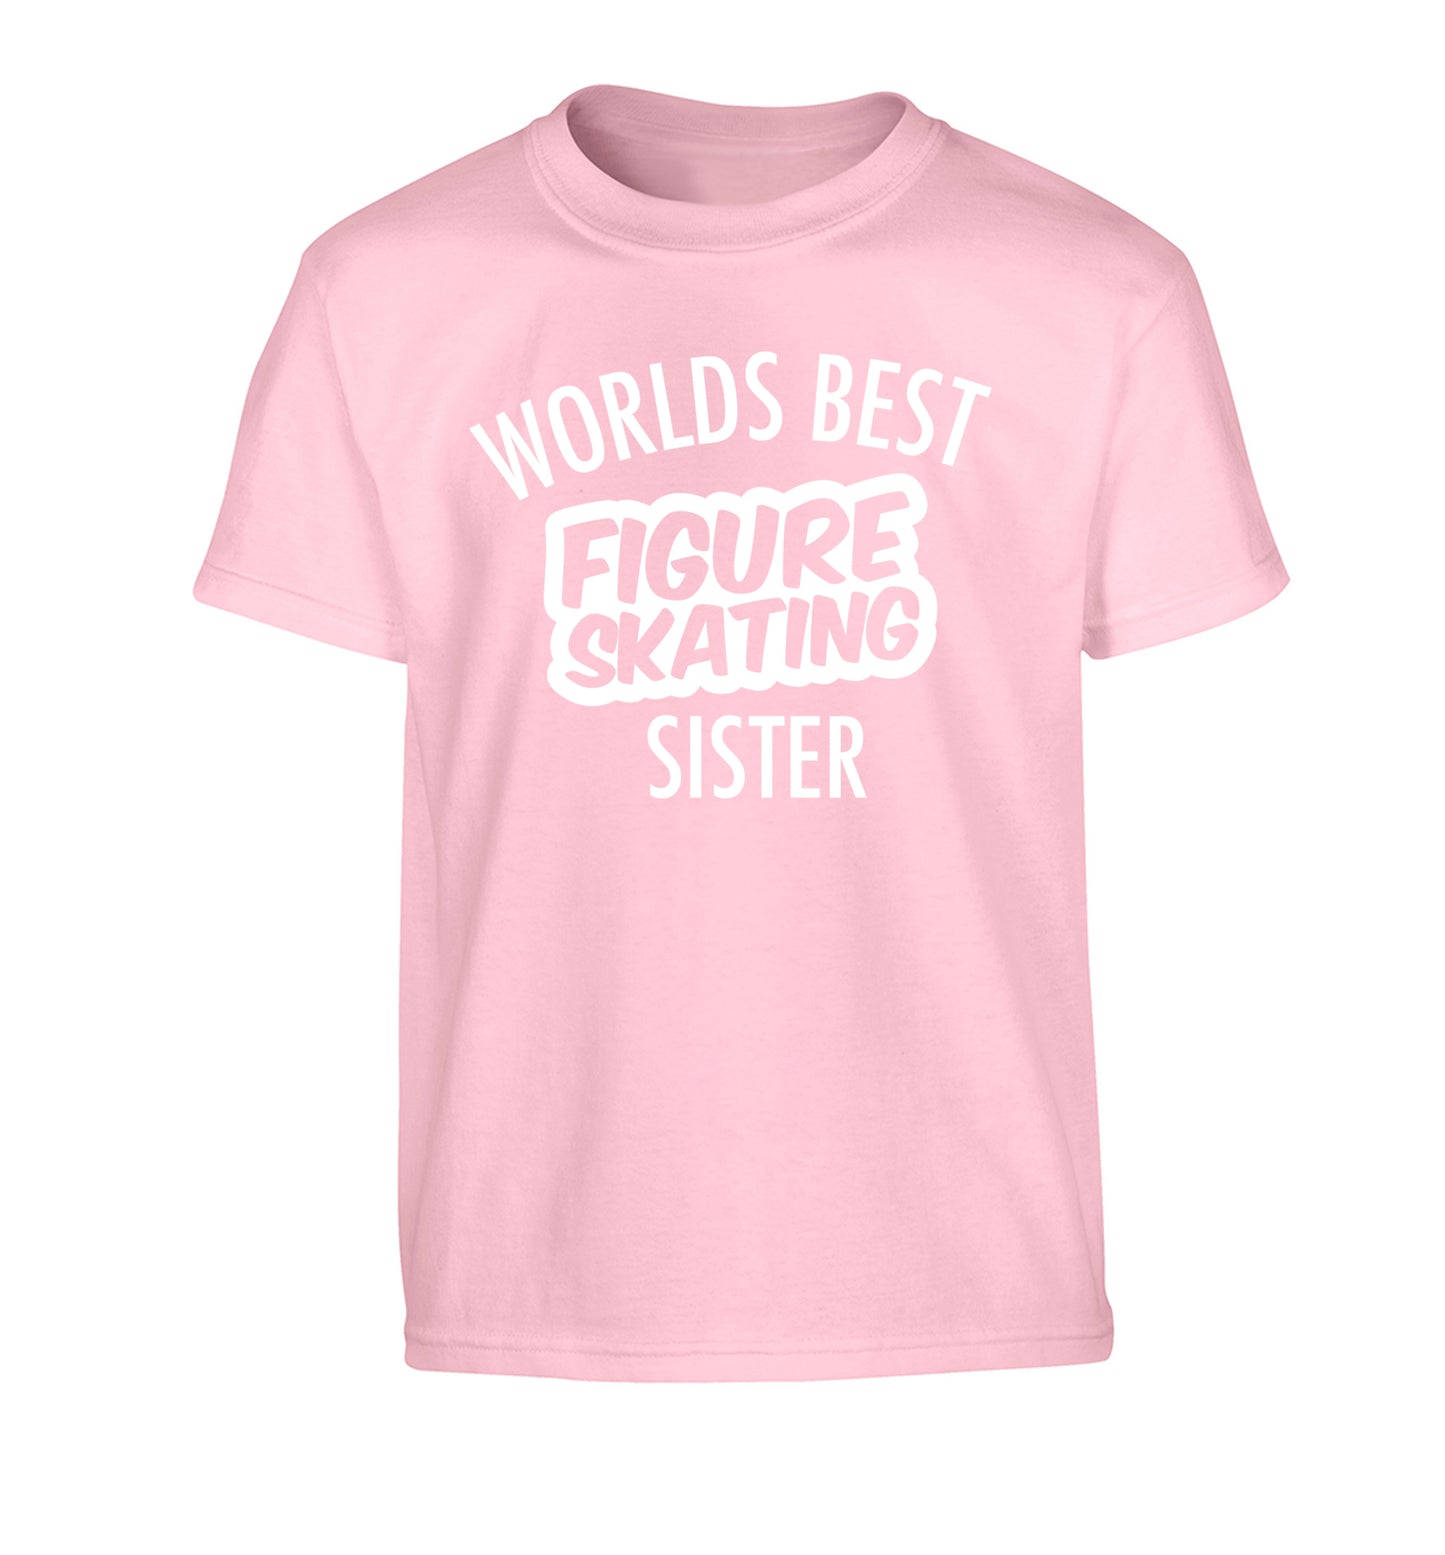 Worlds best figure skating sisterChildren's light pink Tshirt 12-14 Years